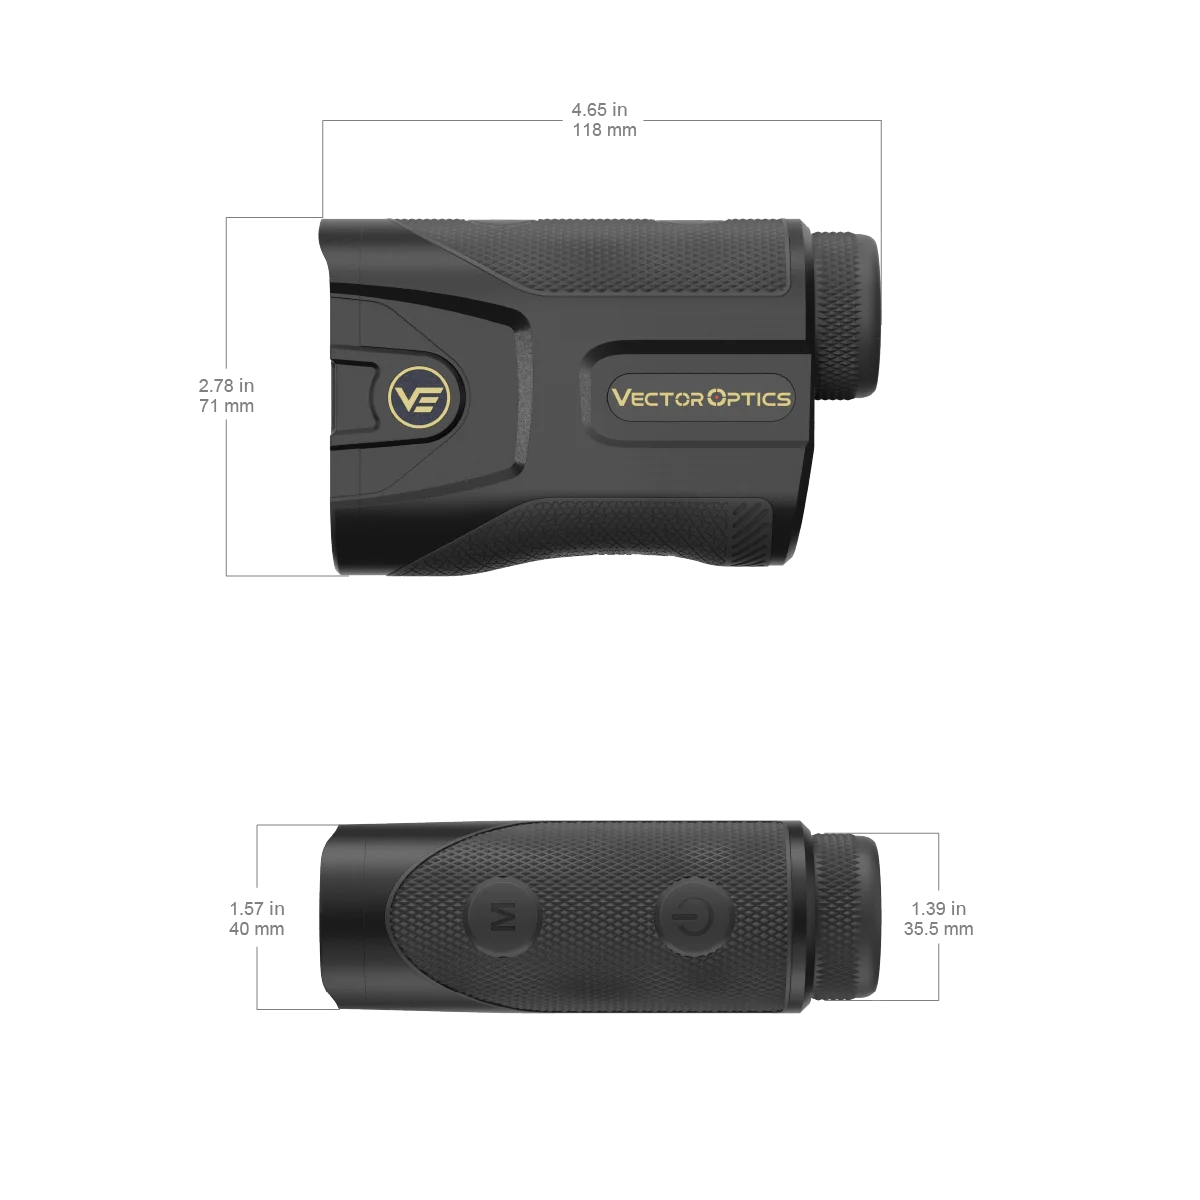 Vector Optics Paragon 7x25 GenIII Digital Ballistic Laser Rangefinder Measure 5-2400 Yards With Golf/Hunt/STD/Tilt/Angle Mode